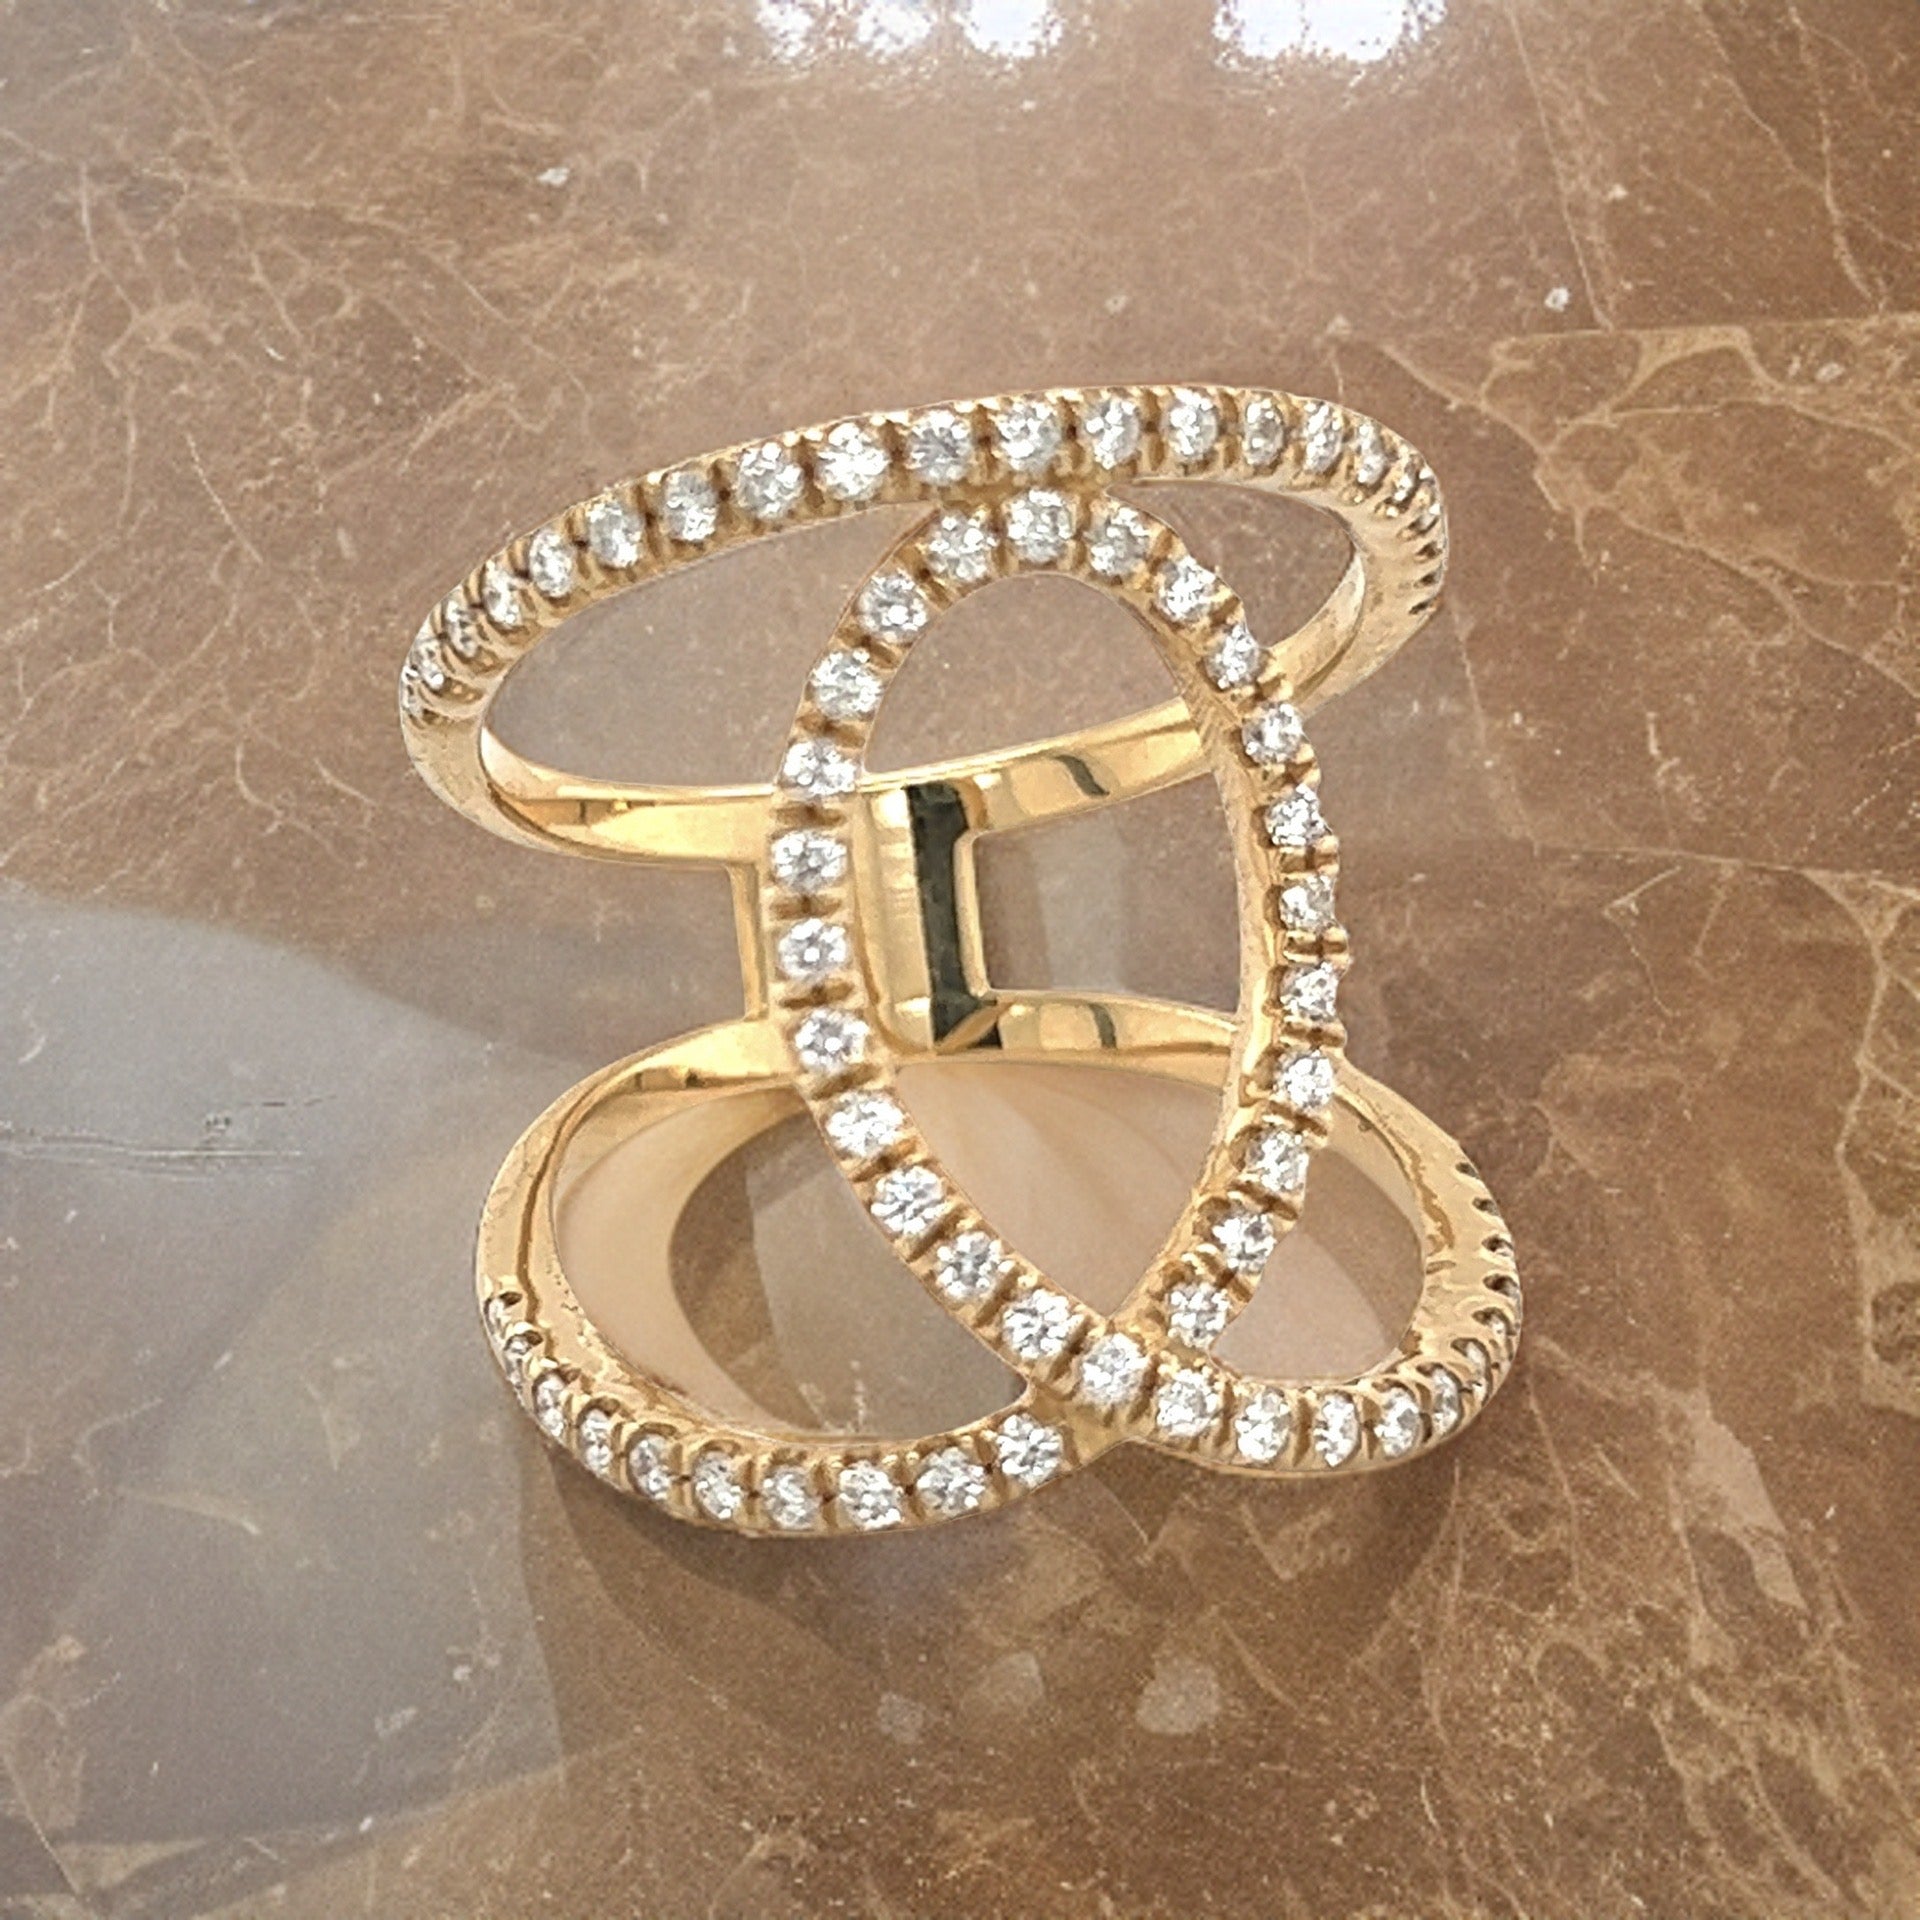 Diamond Ring Size 9.25 14k Gold 0.85 TCW 7.02 Grams Certified $5,950 215418 - Certified Fine Jewelry